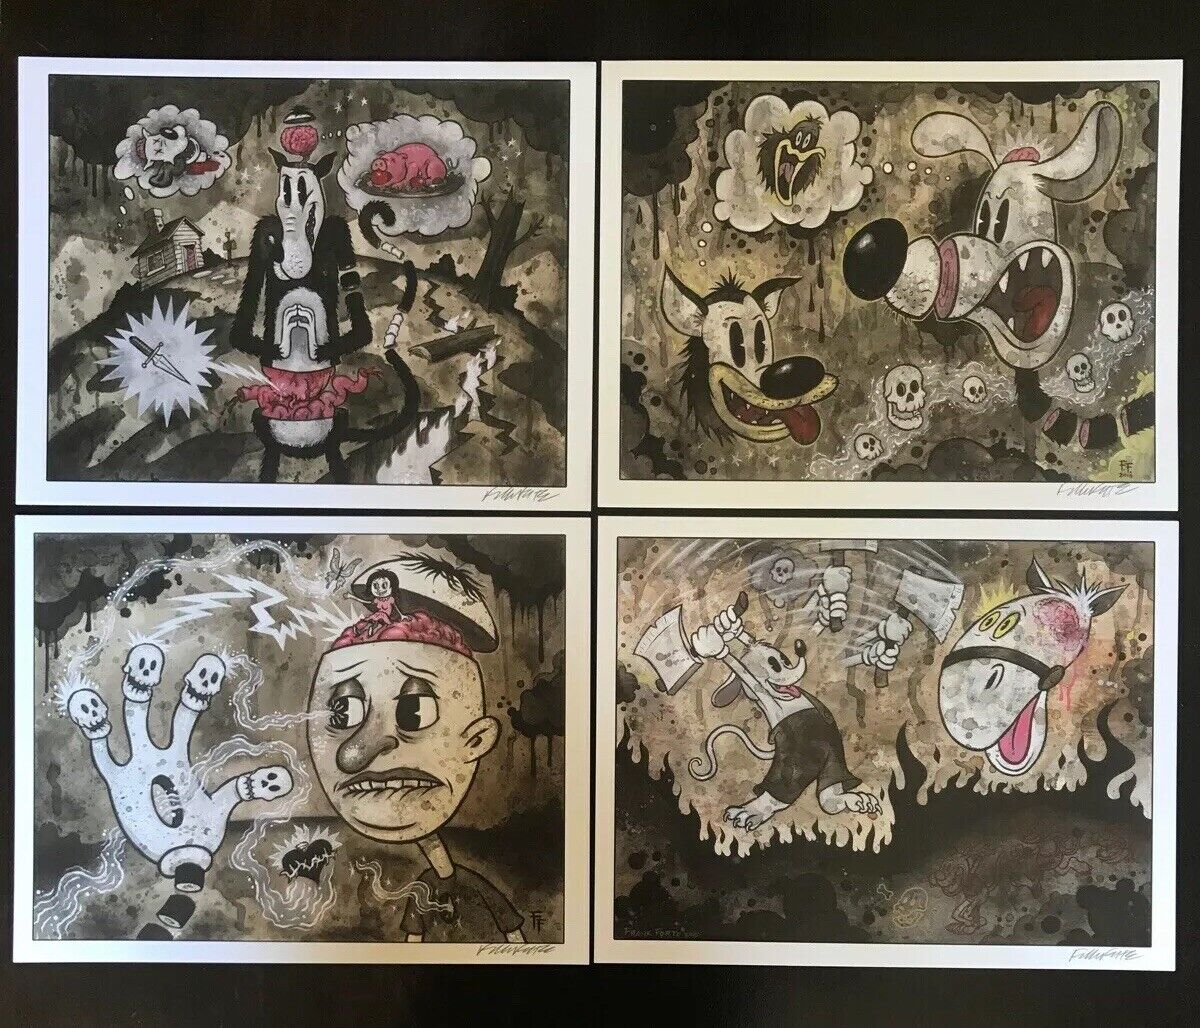 8.5x11 Set #2 Signed prints By Frank Forte Pop Surrealism Cartoon Dark Art